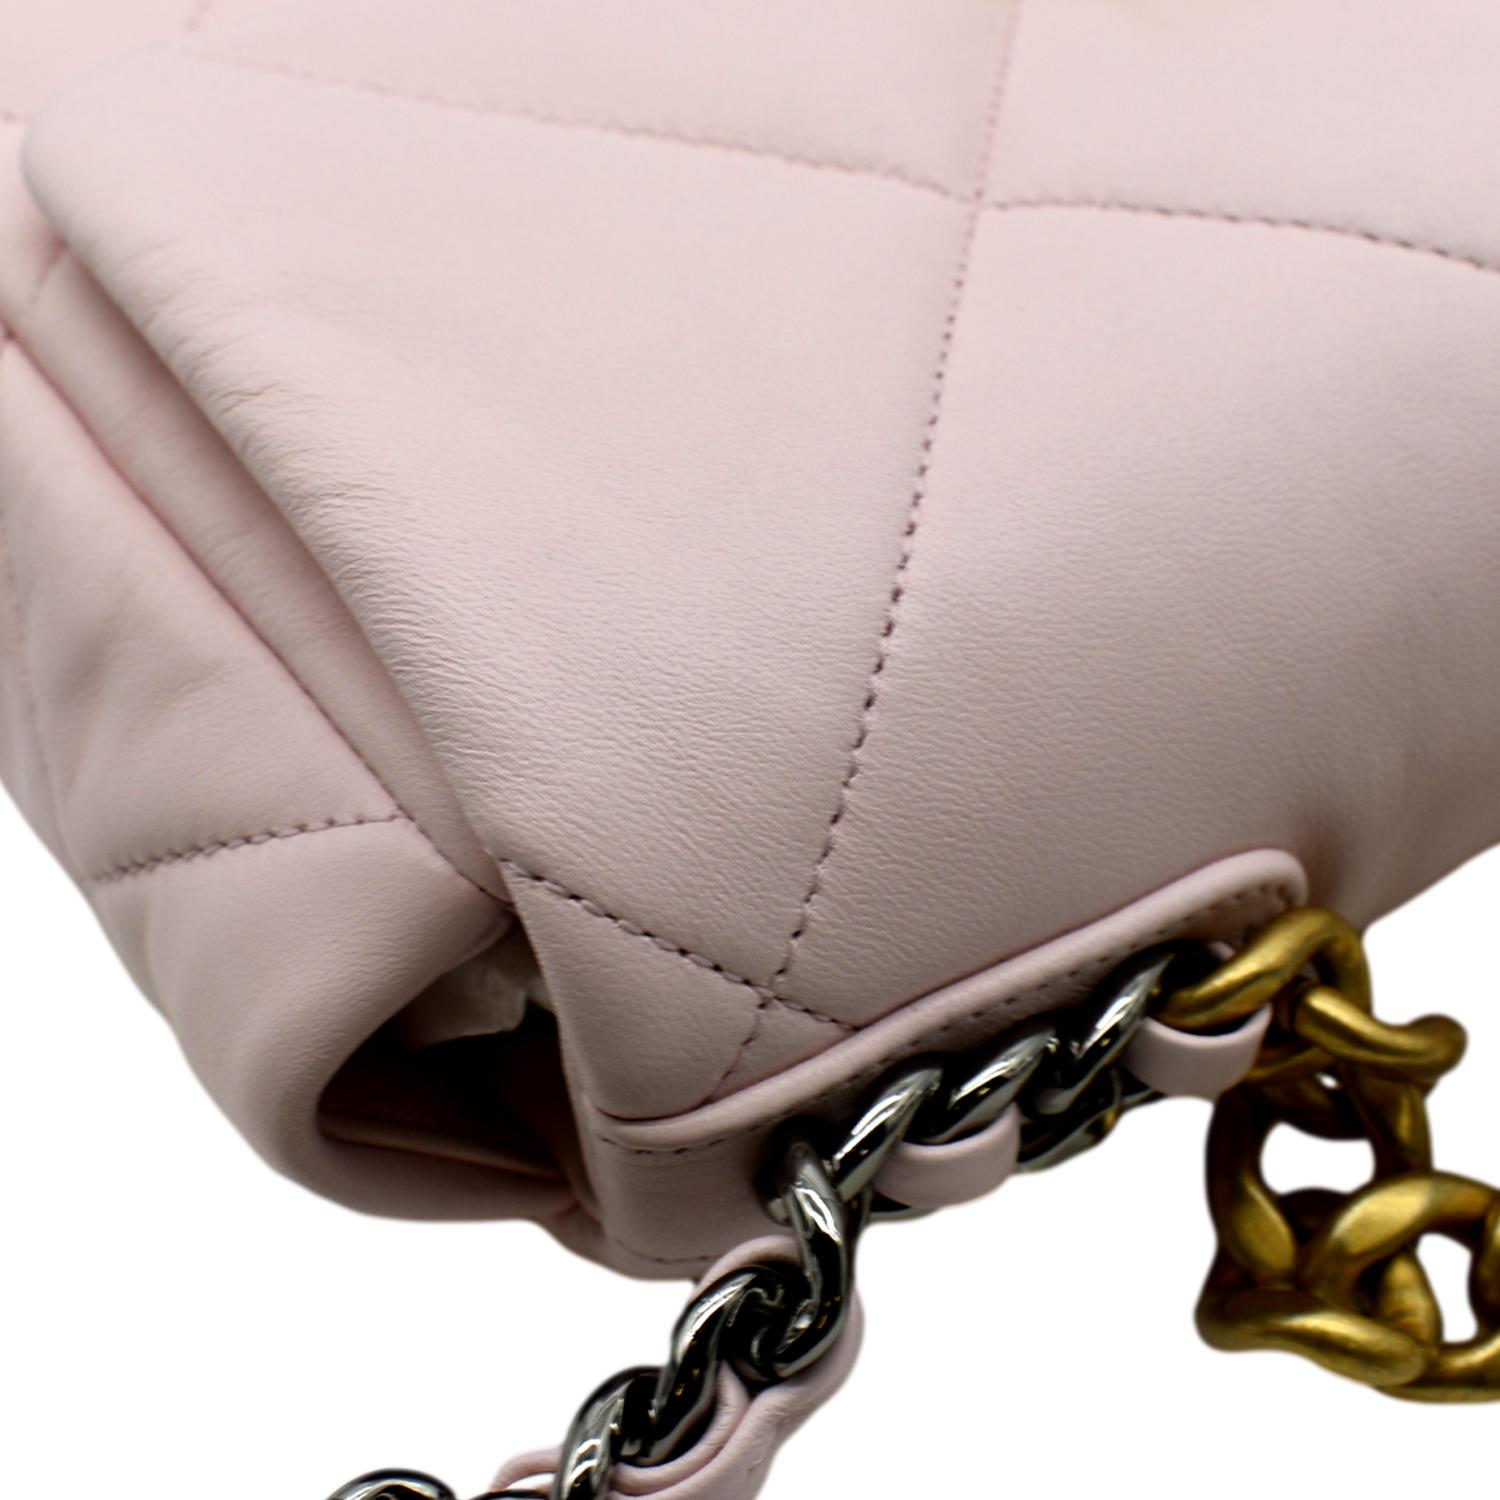 Chanel Pink Metallic Single Flap Shoulder Bag in Lambskin Leather